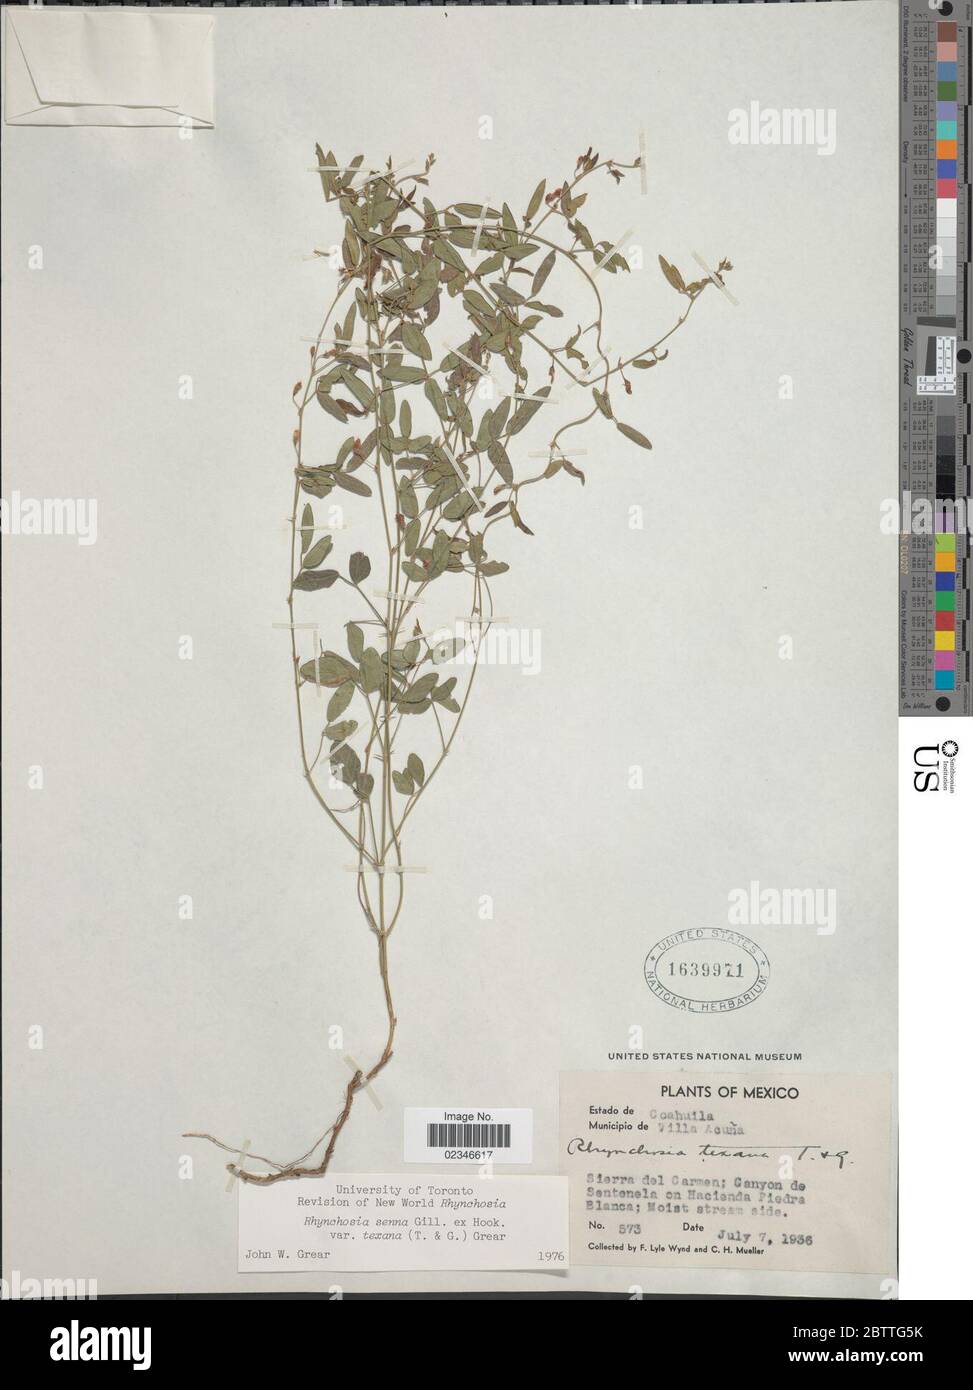 Rhynchosia senna Gillies ex Hook. Stock Photo